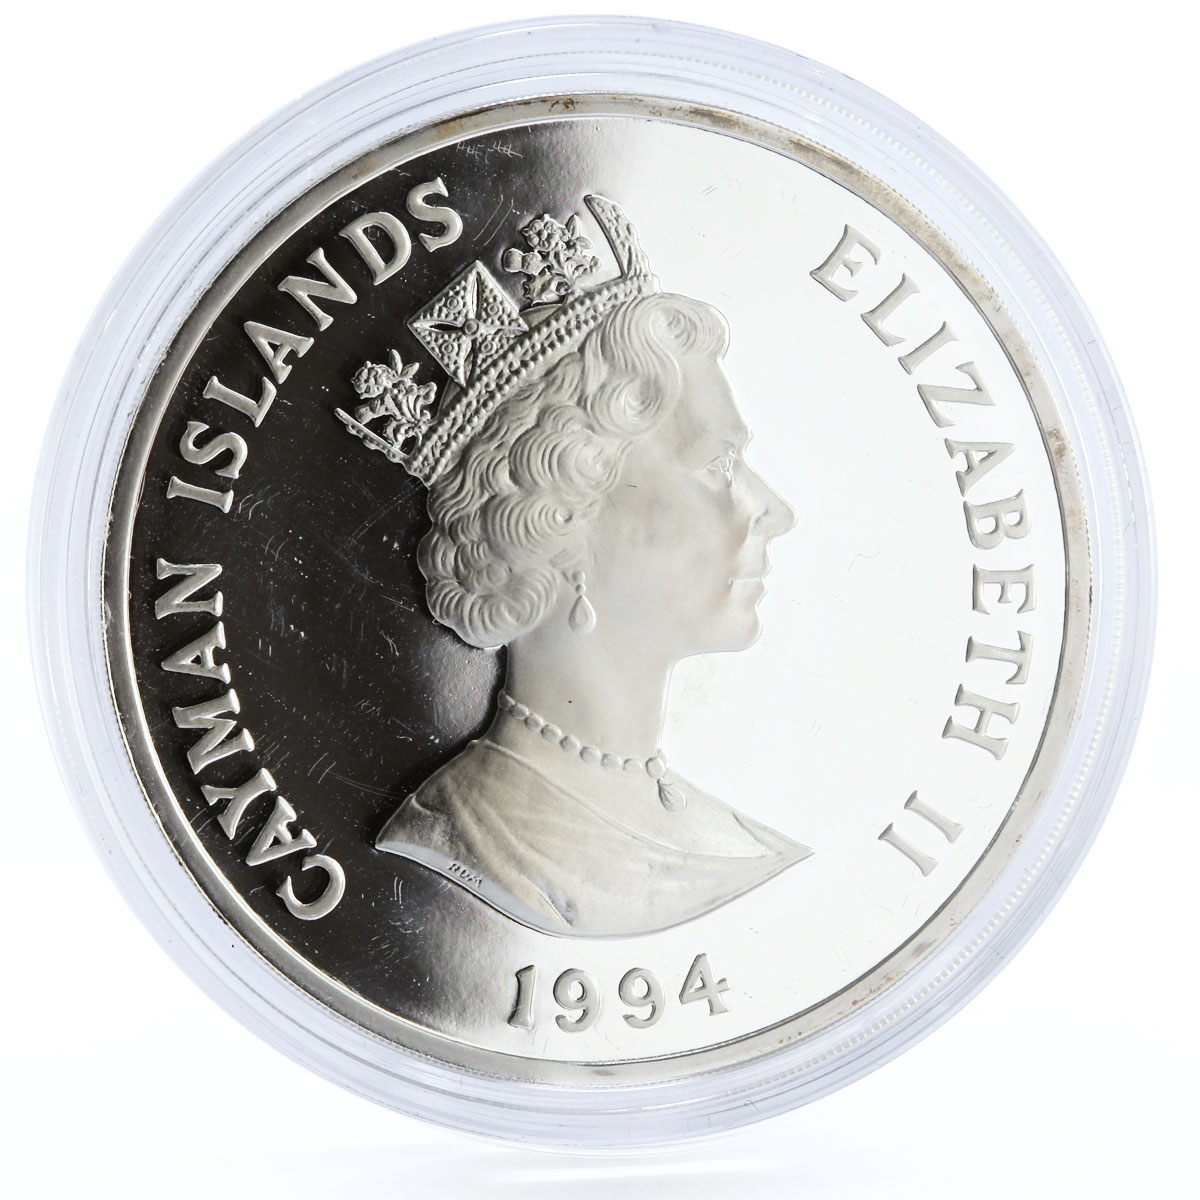 Cayman Islands 1 dollar English Pirate Sir Francis Drake proof silver coin 1994